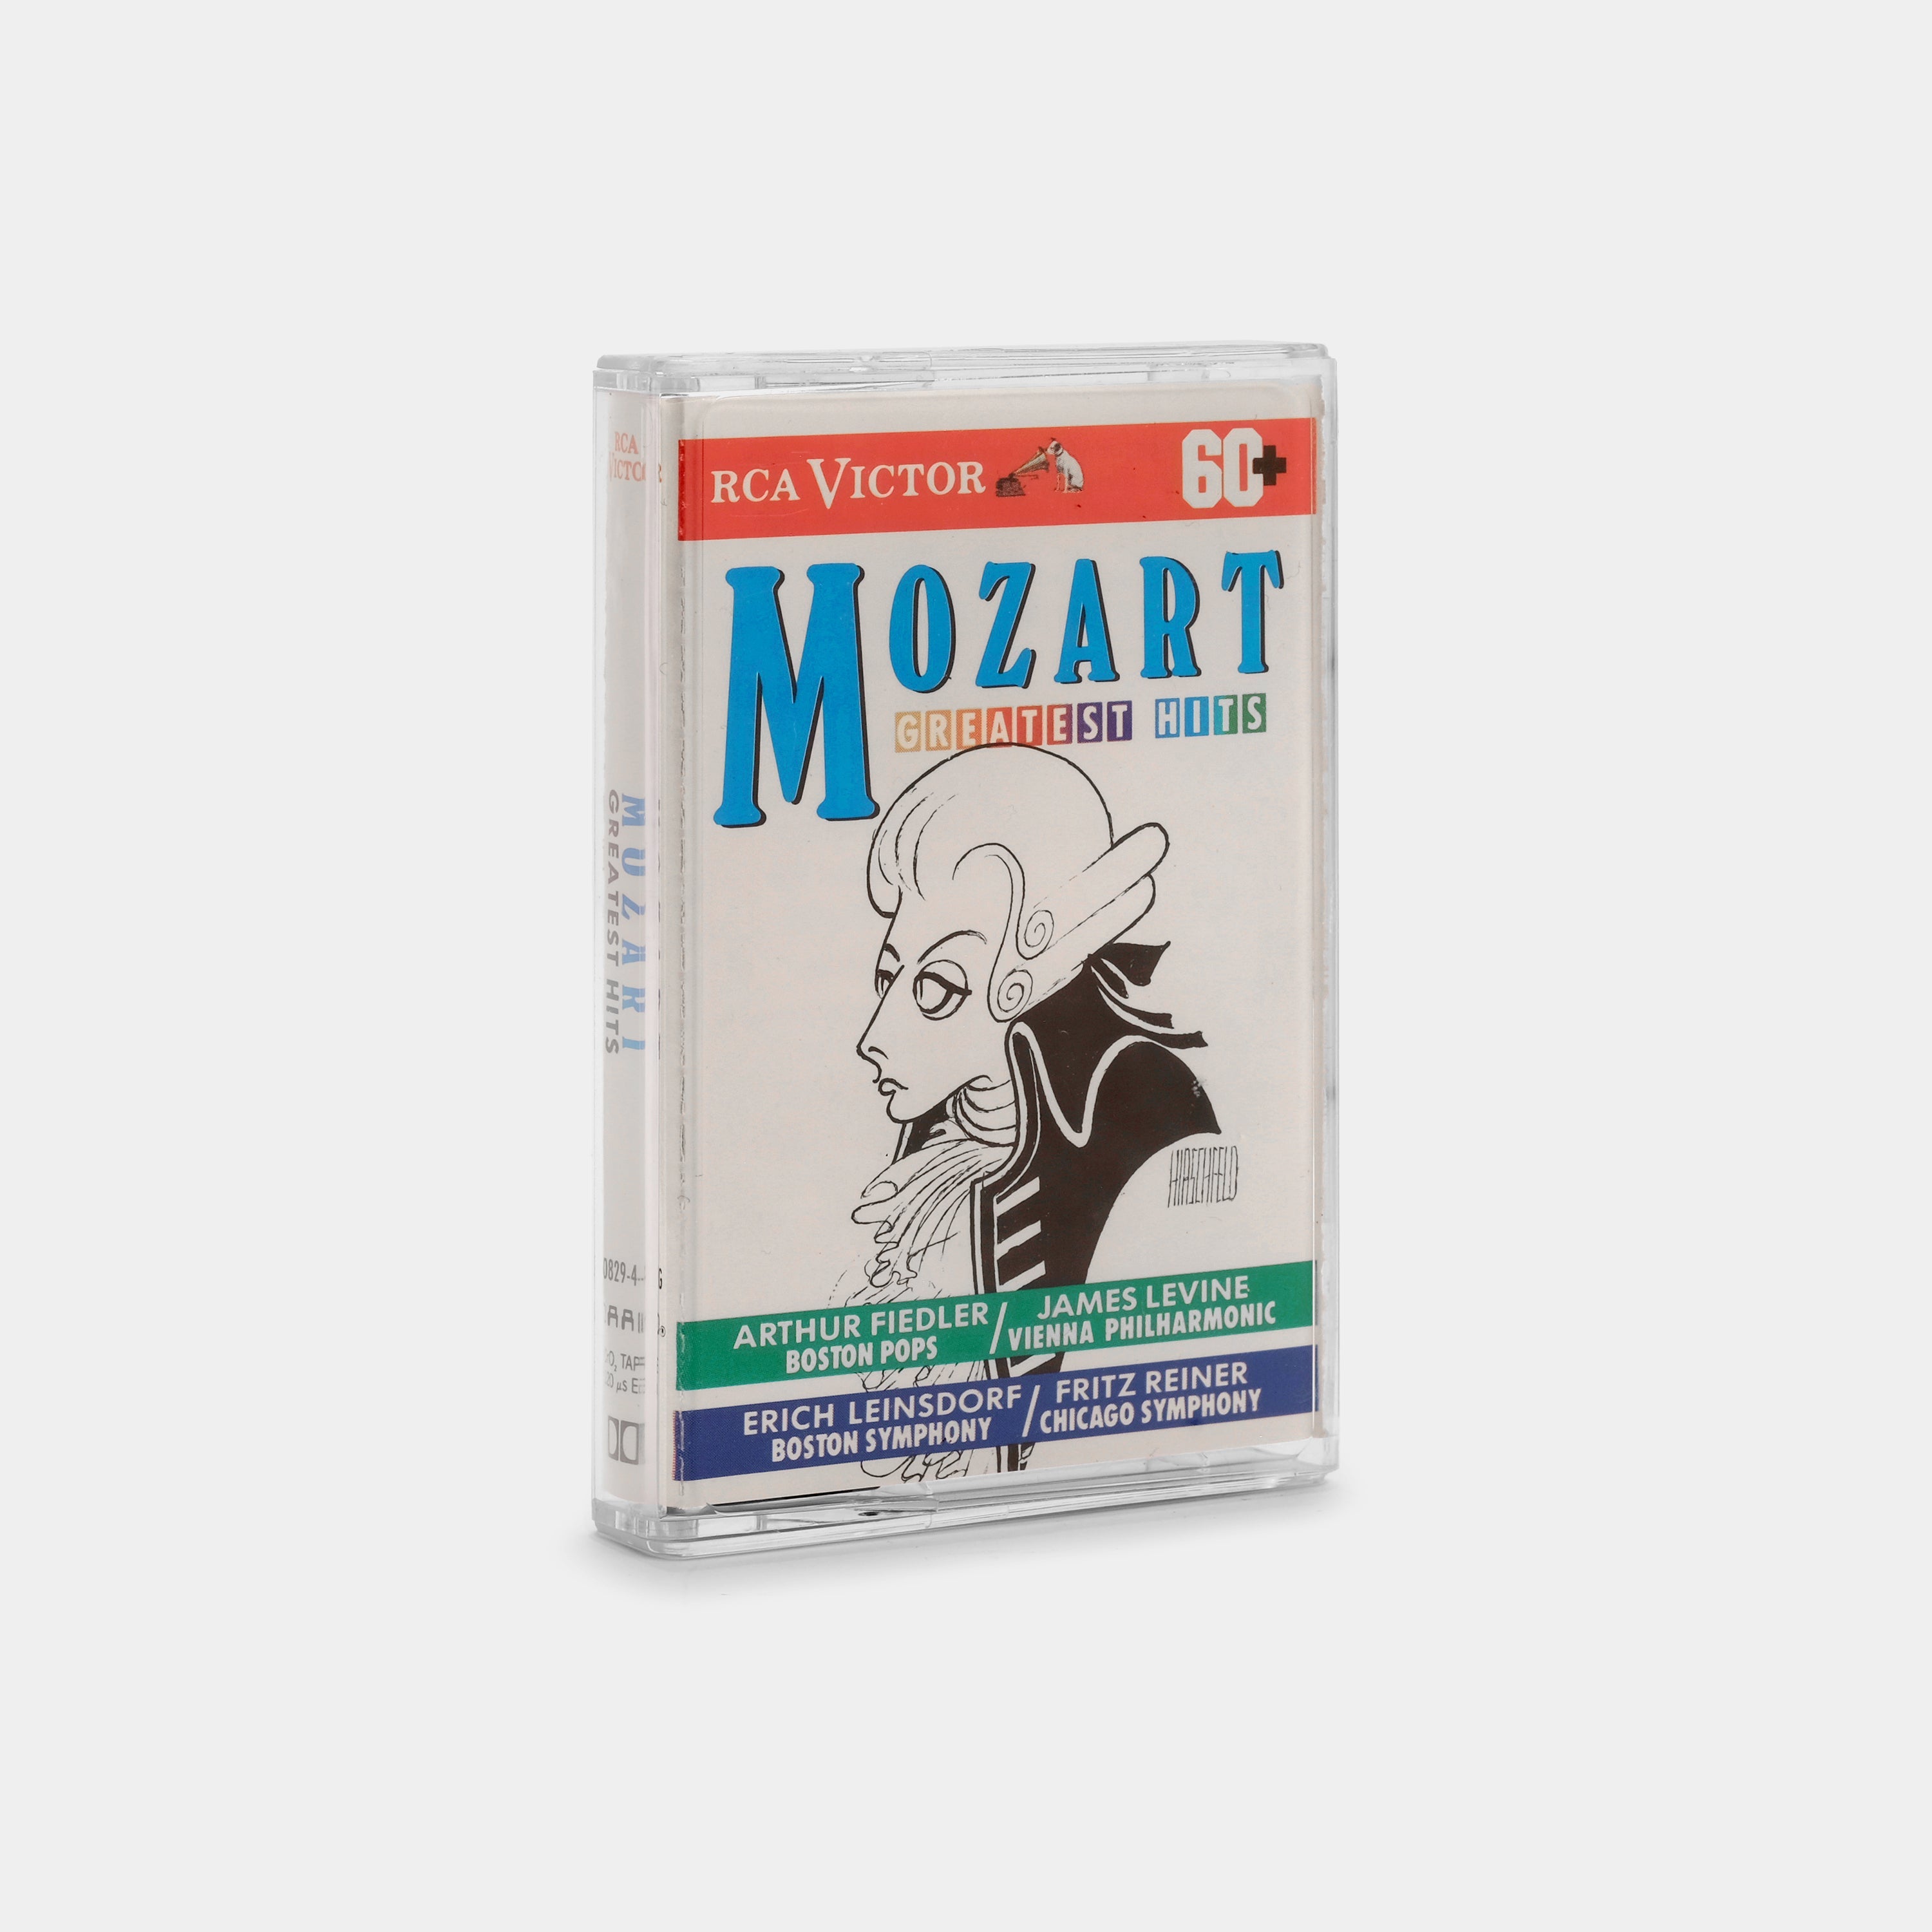 Mozart: Greatest Hits Cassette Tape